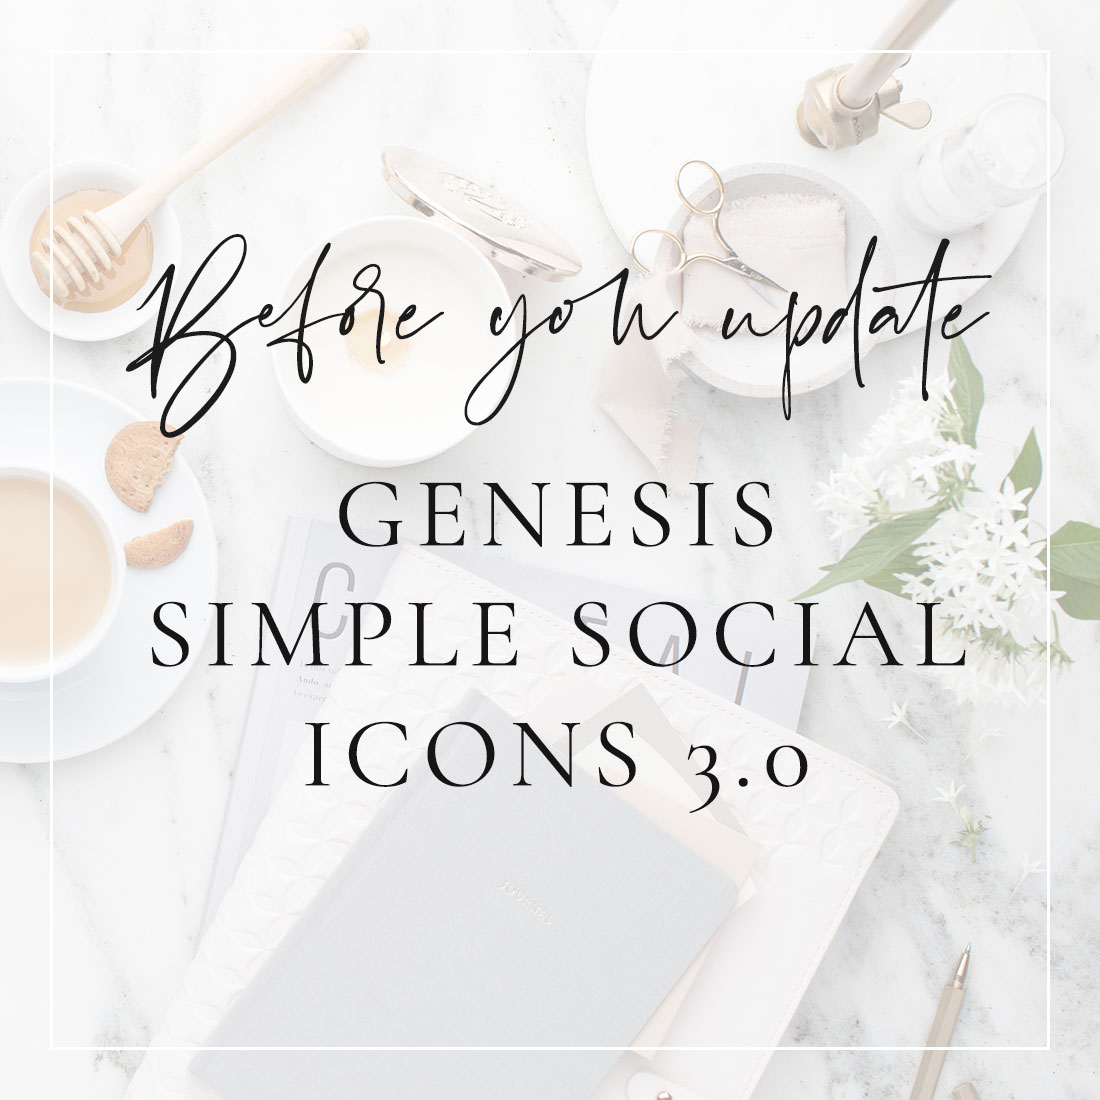 Genesis Simple Social Icons 3.0